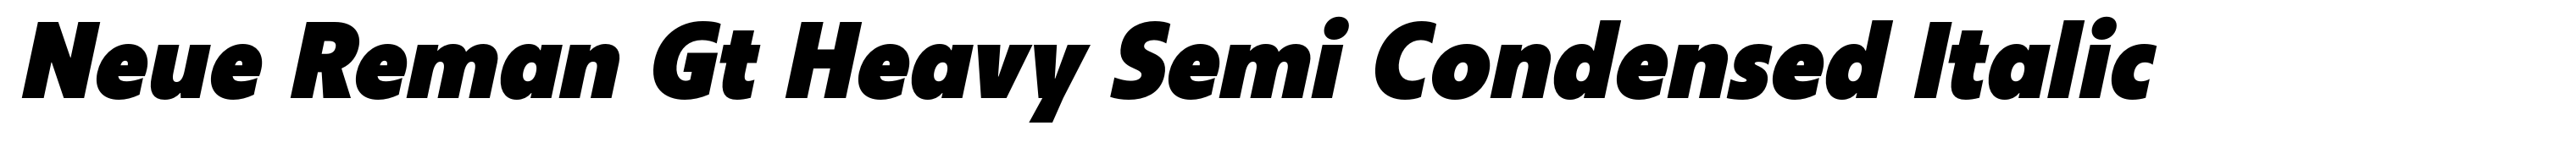 Neue Reman Gt Heavy Semi Condensed Italic